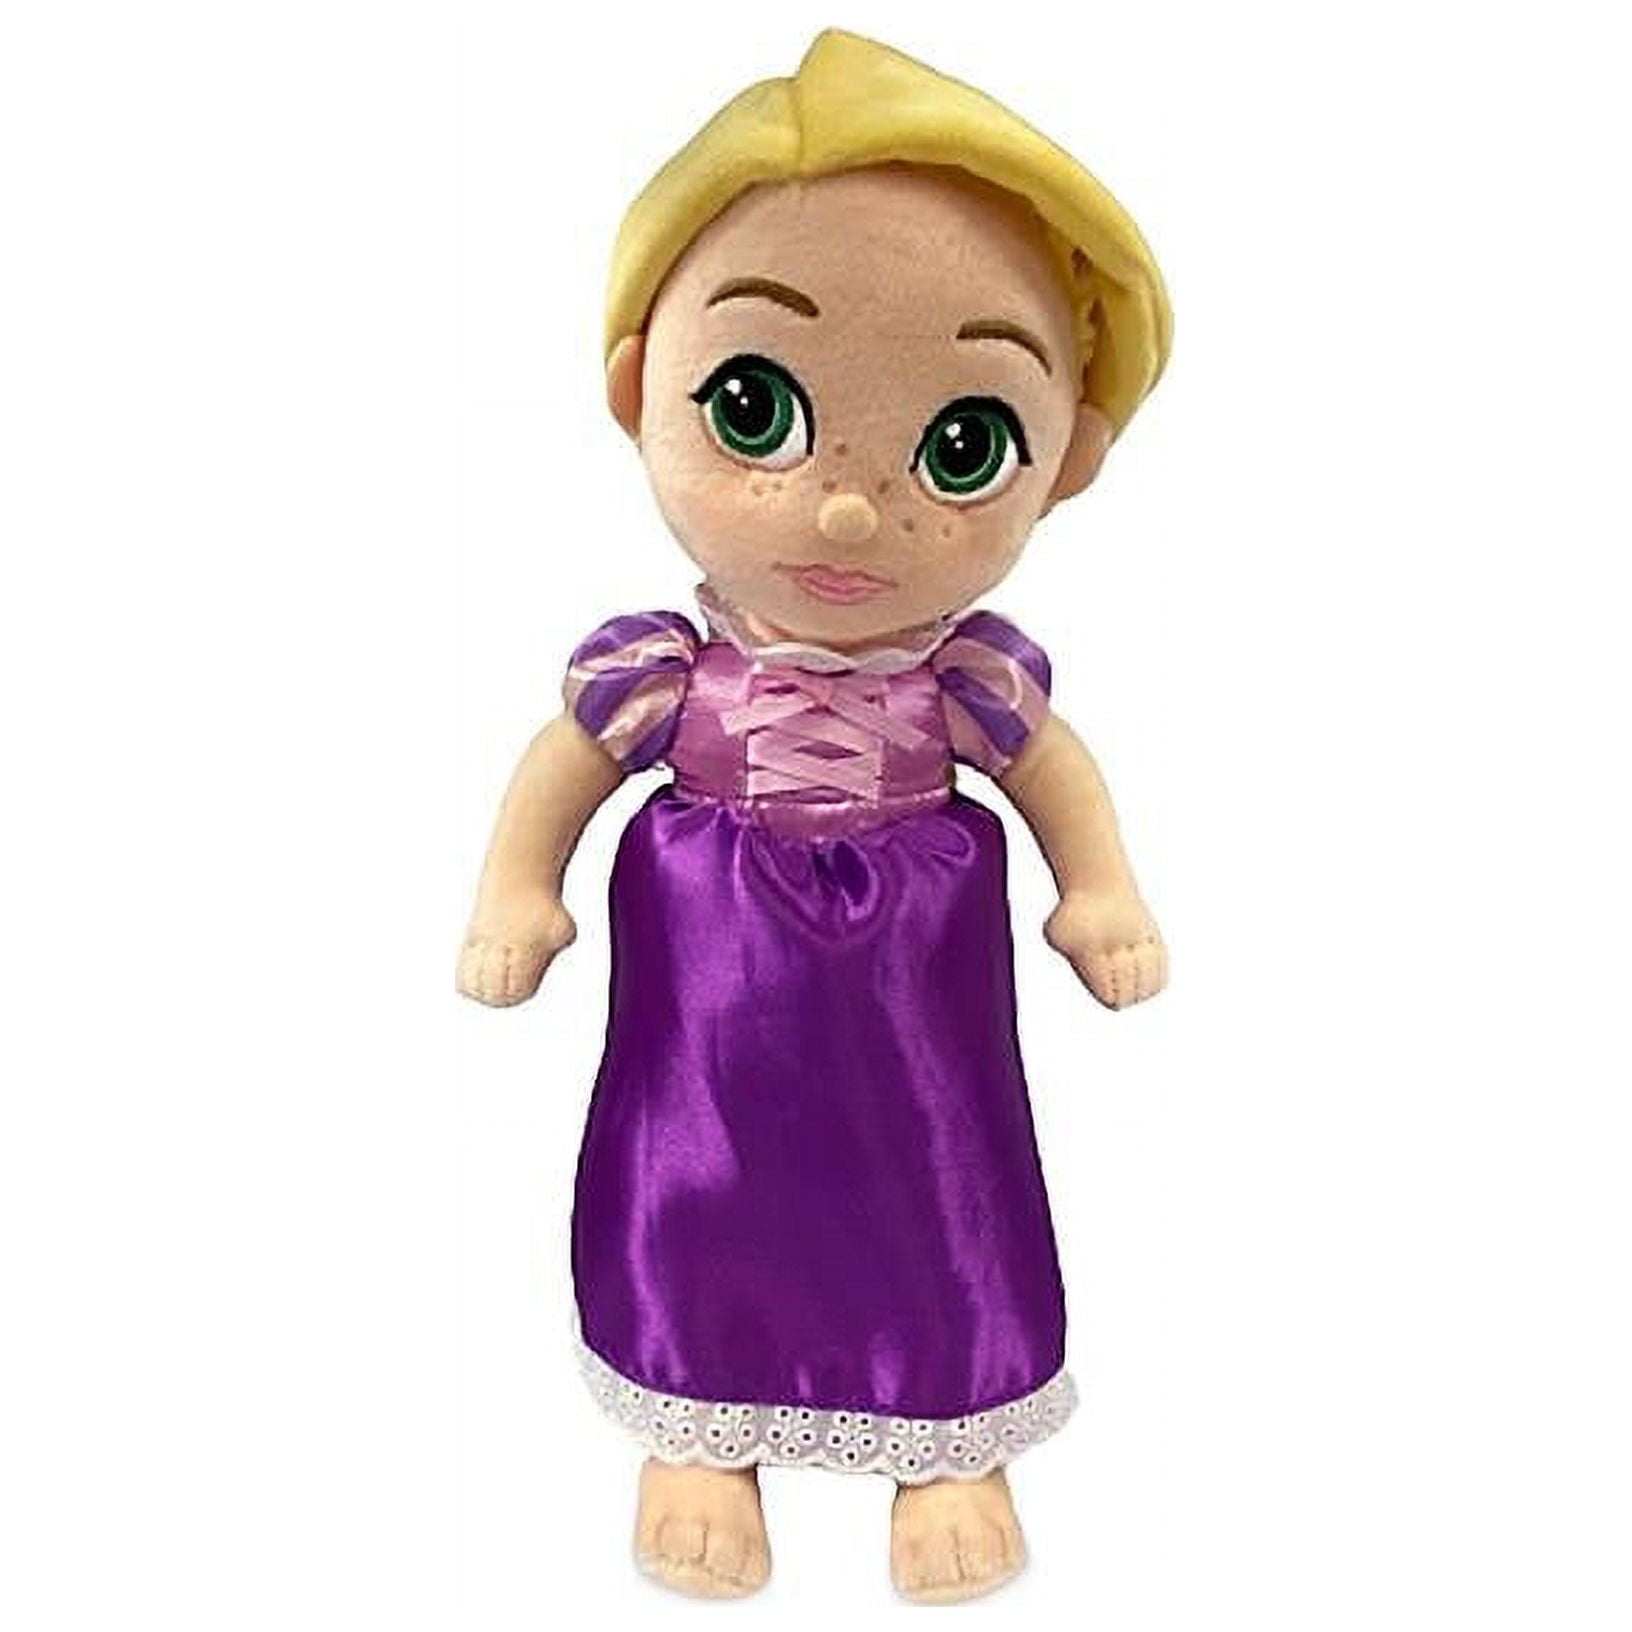 Disney Princess Animator Rapunzel Doll - Disney store